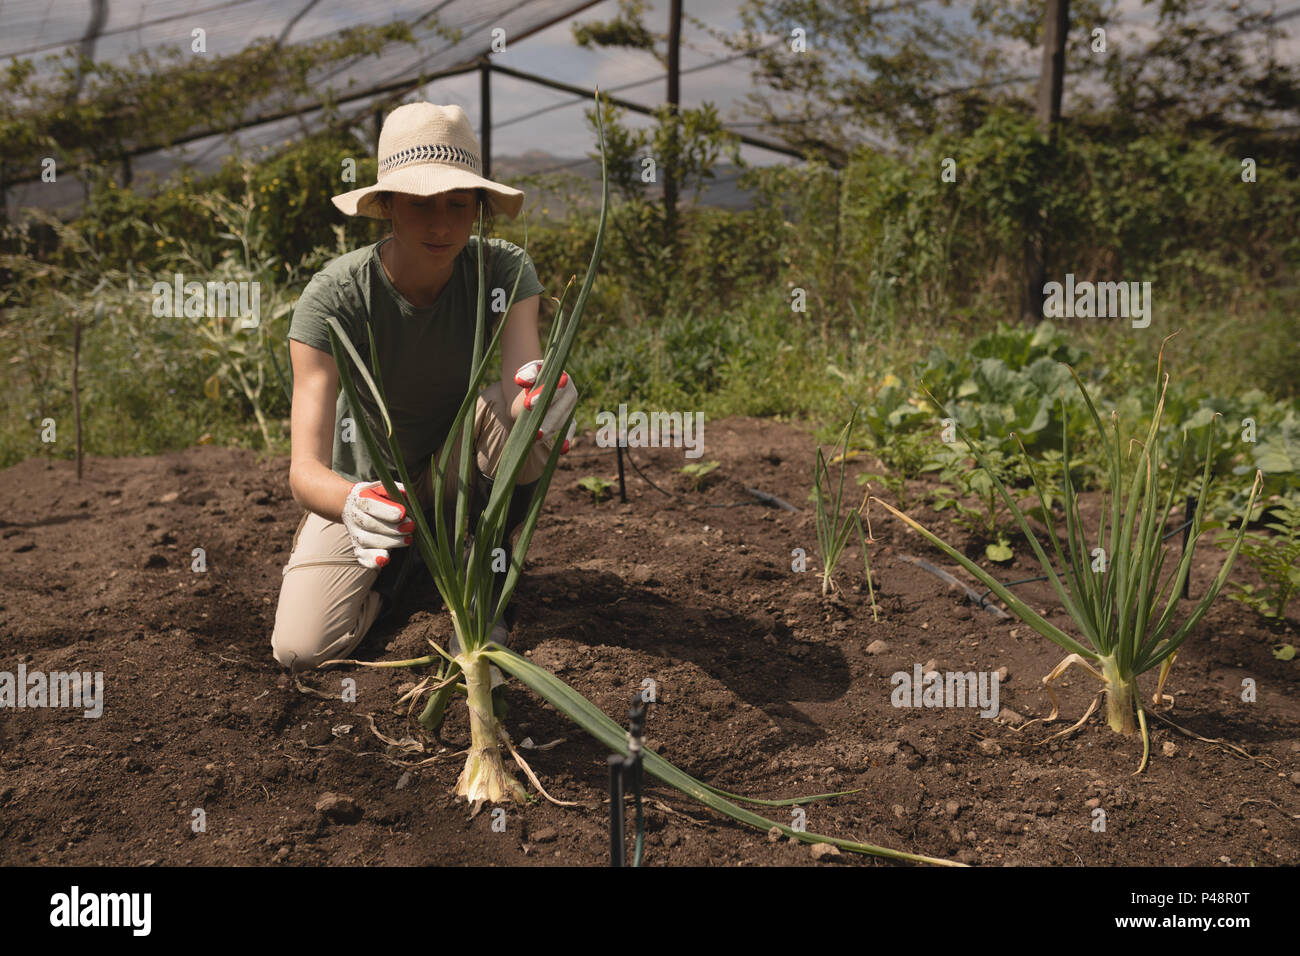 Farmer placing plant into soil Stock Photo